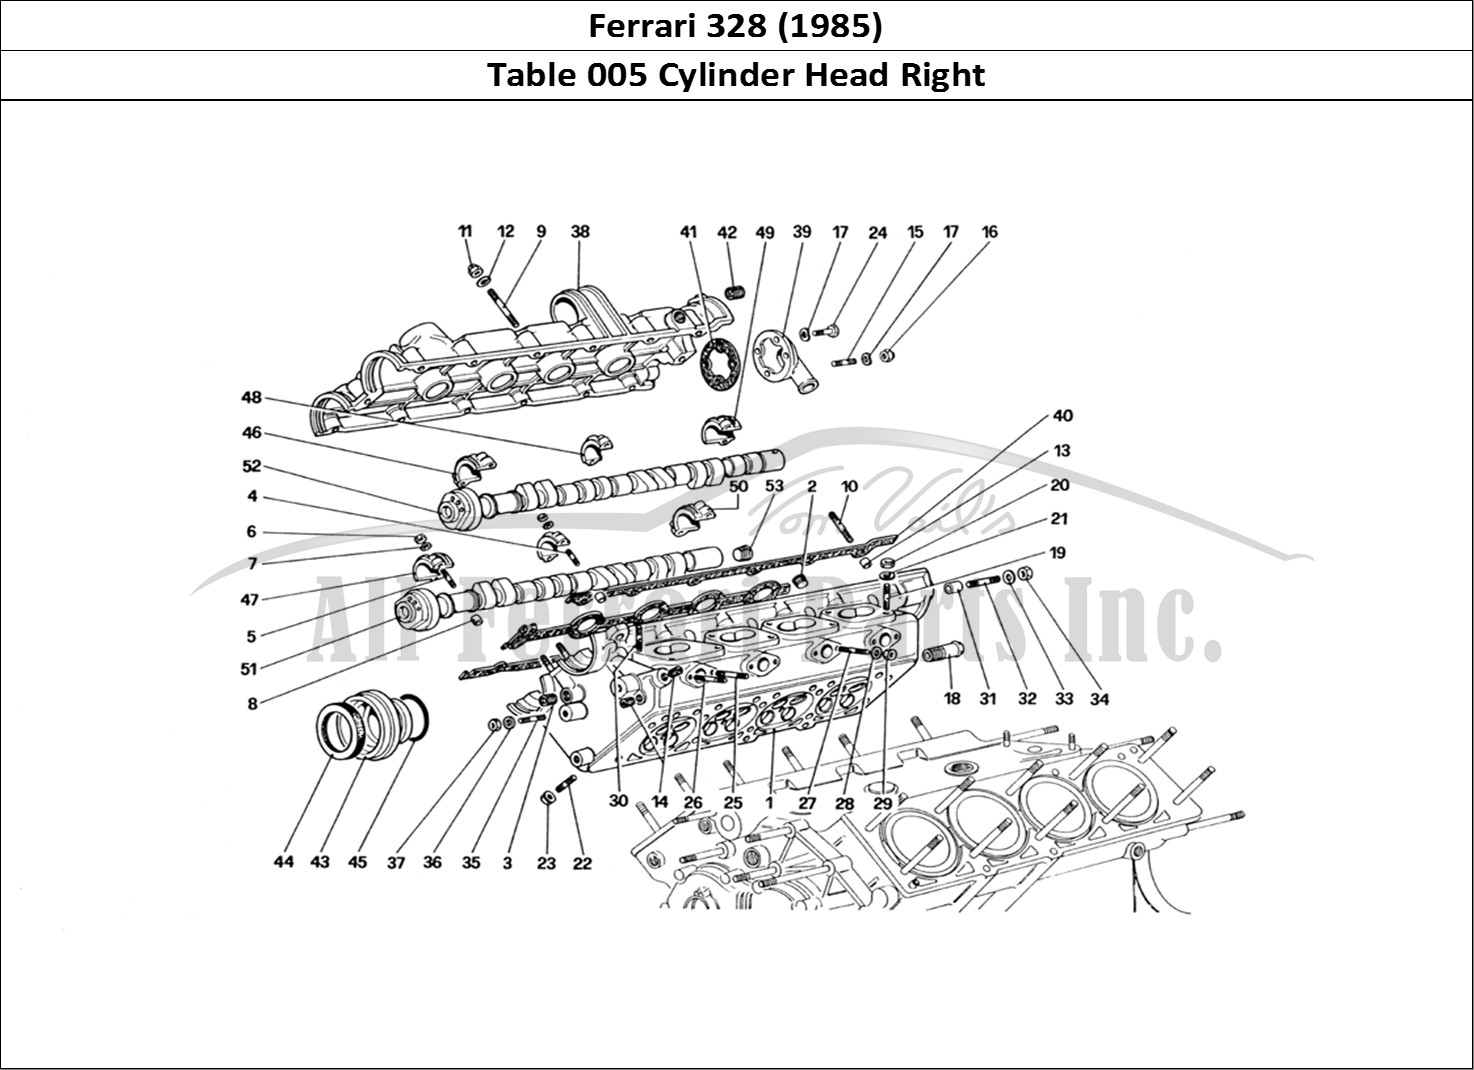 Ferrari Parts Ferrari 328 (1985) Page 005 Cylinder Head (Right)